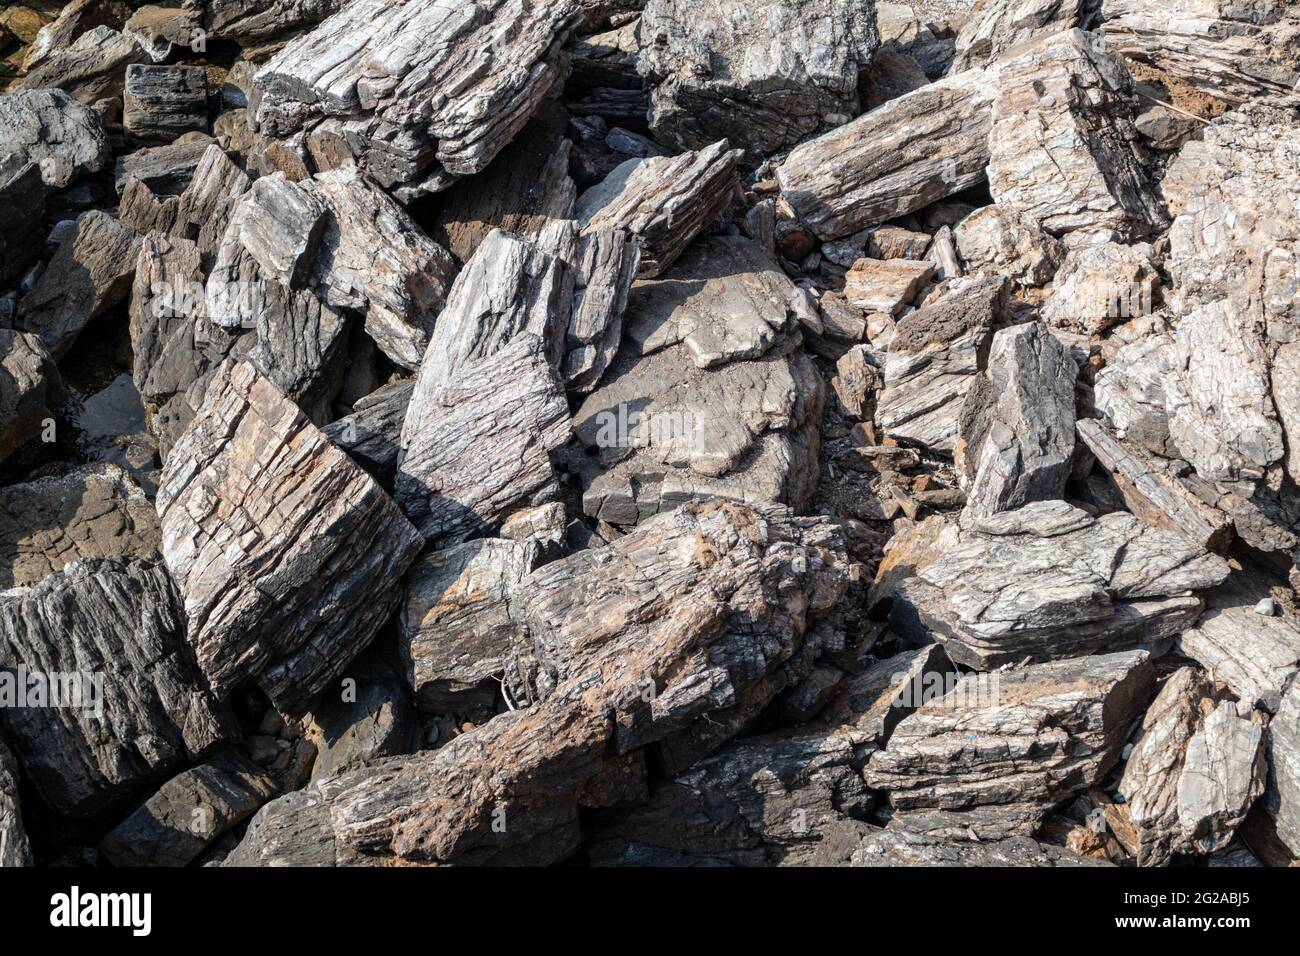 https://c8.alamy.com/comp/2G2ABJ5/aegean-sea-sharp-big-rocks-shore-close-up-texture-various-rocky-surface-in-sunny-greece-near-athens-2G2ABJ5.jpg